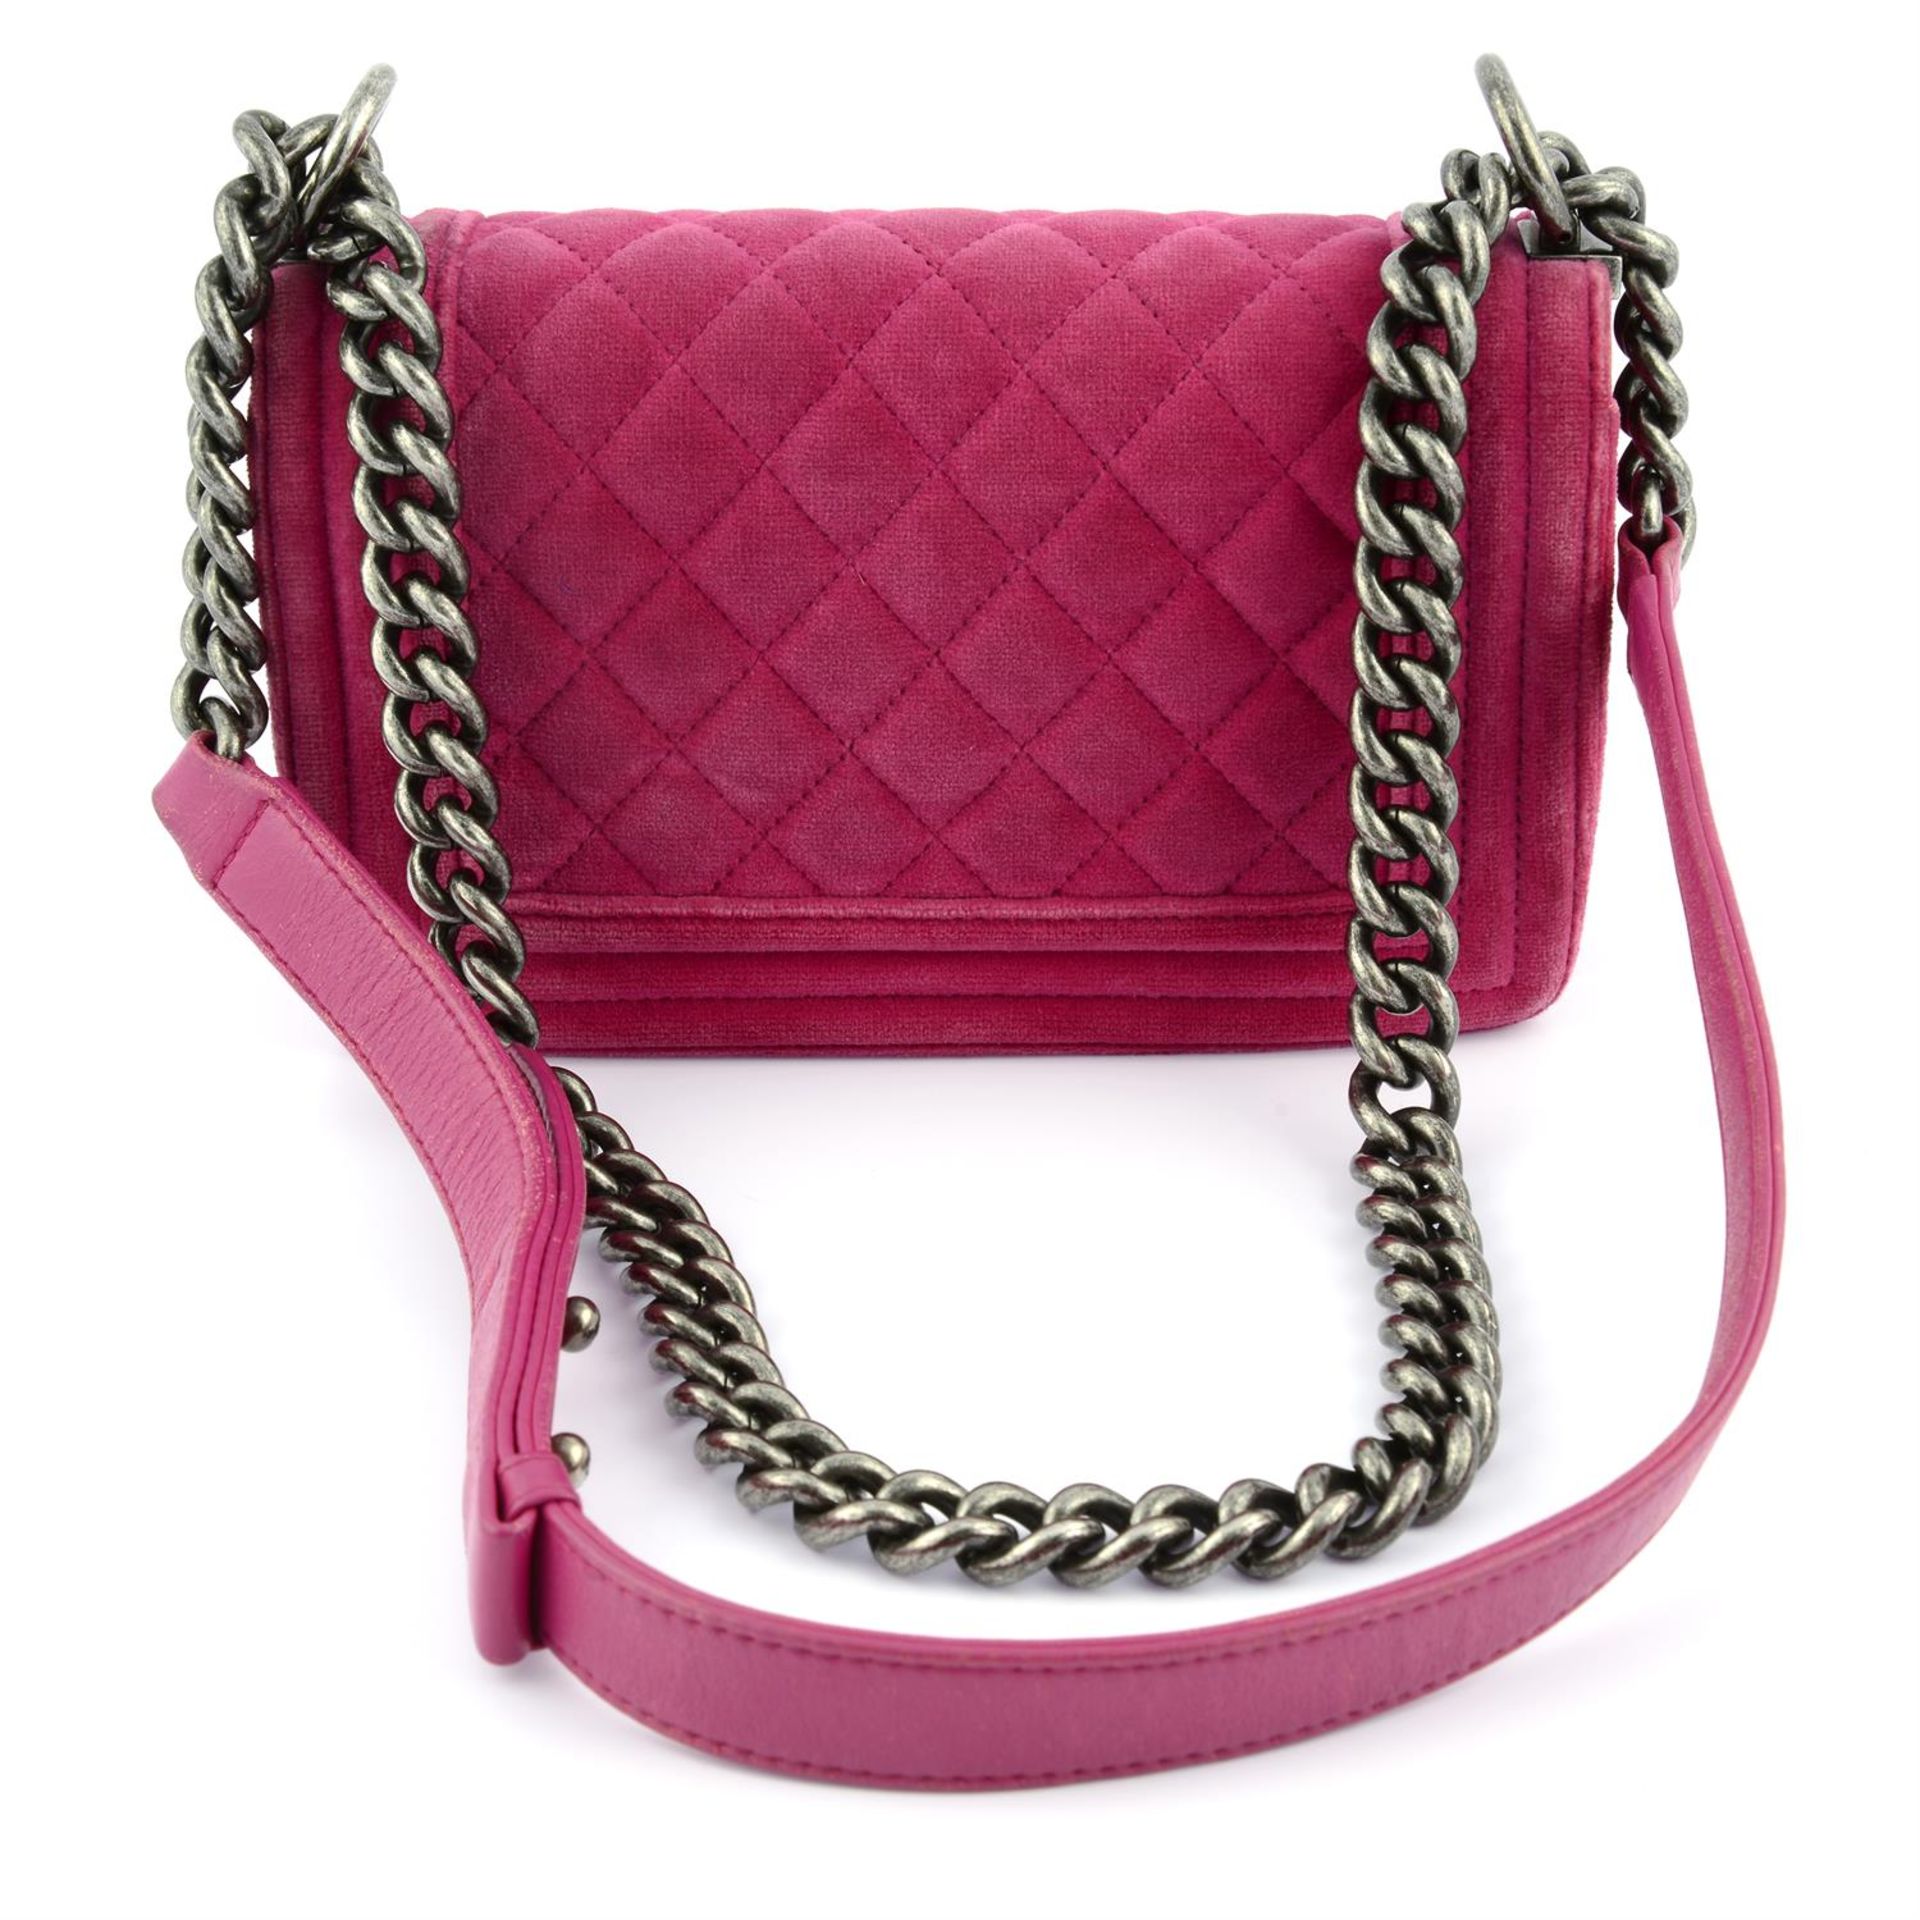 CHANEL - a pink velvet small Boy handbag. - Image 2 of 7